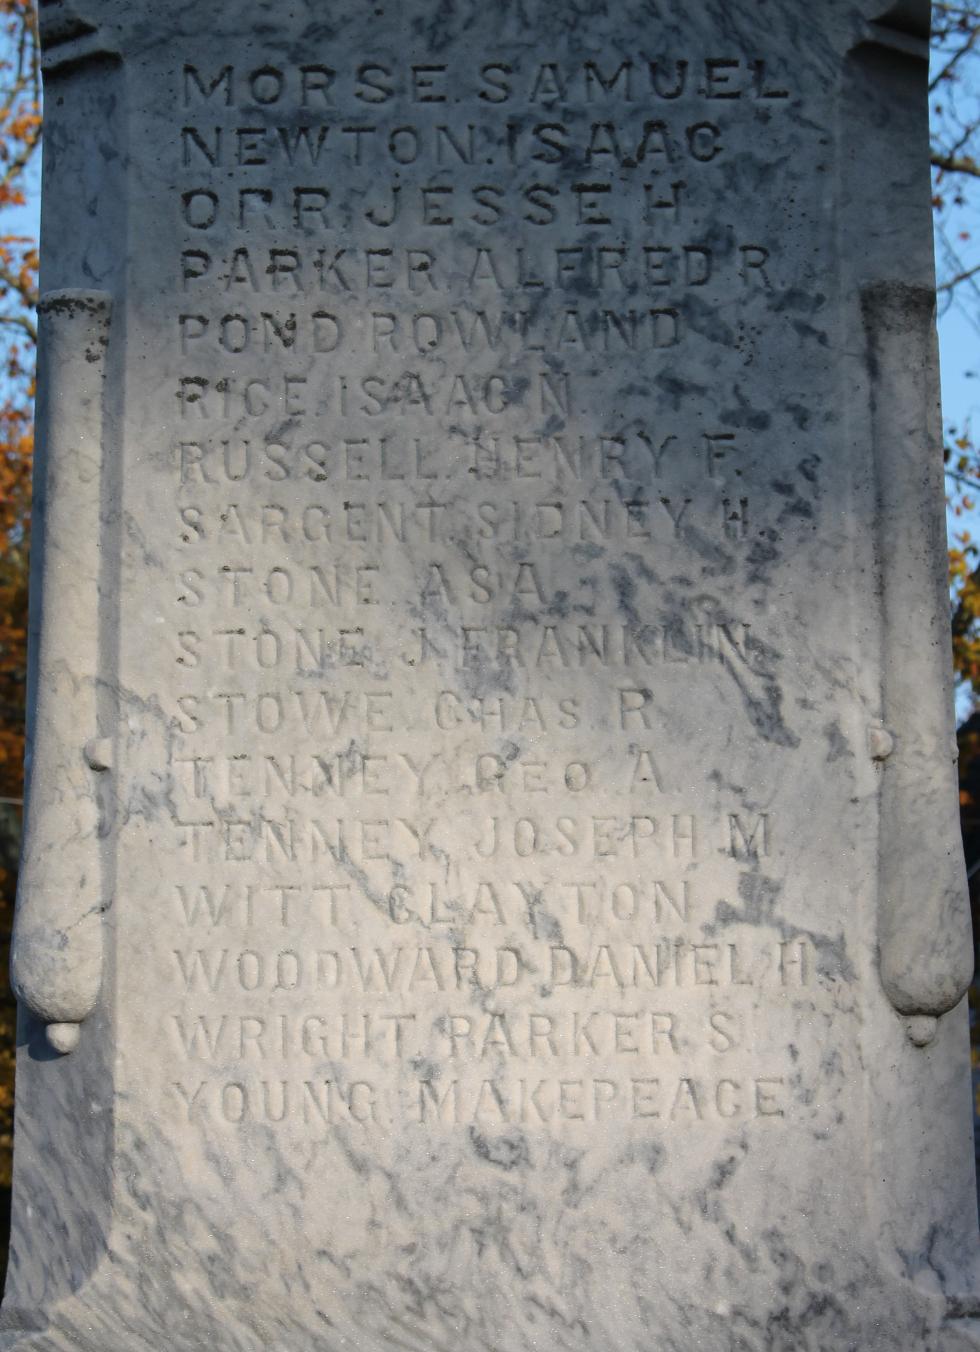 Hubbardston Massachusetts Civil War Veterans Memorial